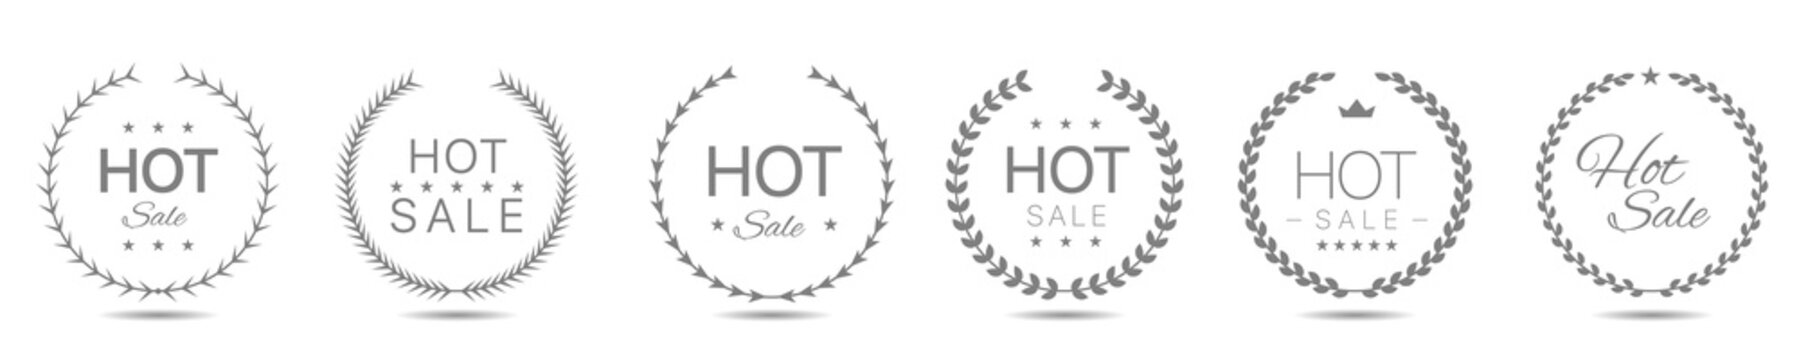 Hot sale grey laurel wreath label set